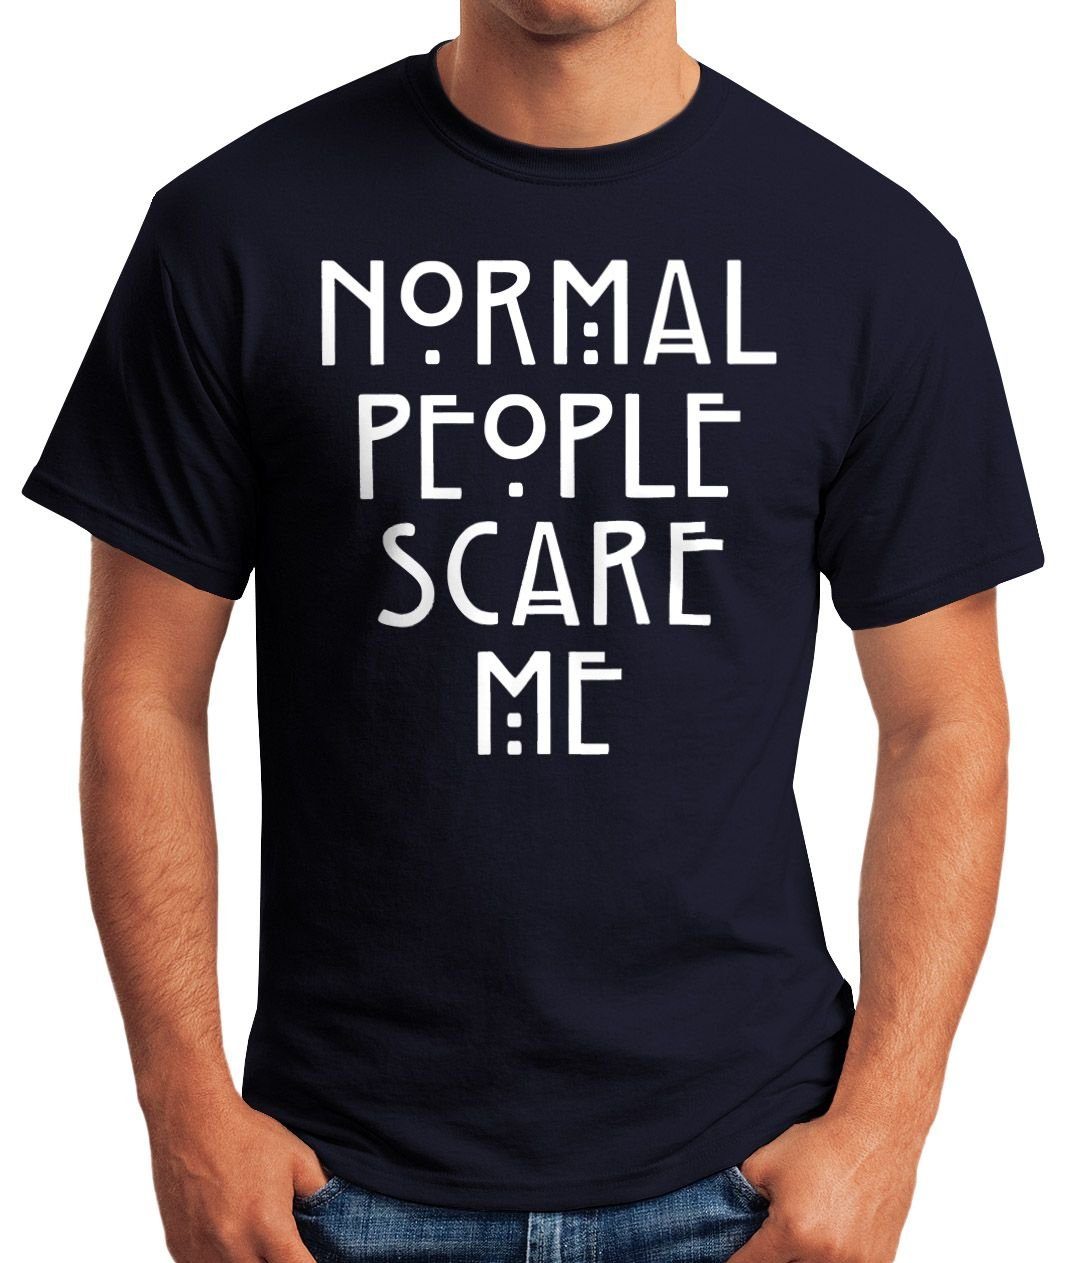 Me mit T-Shirt Fun-Shirt People Print-Shirt MoonWorks Normal Scare Moonworks® Print navy Herren